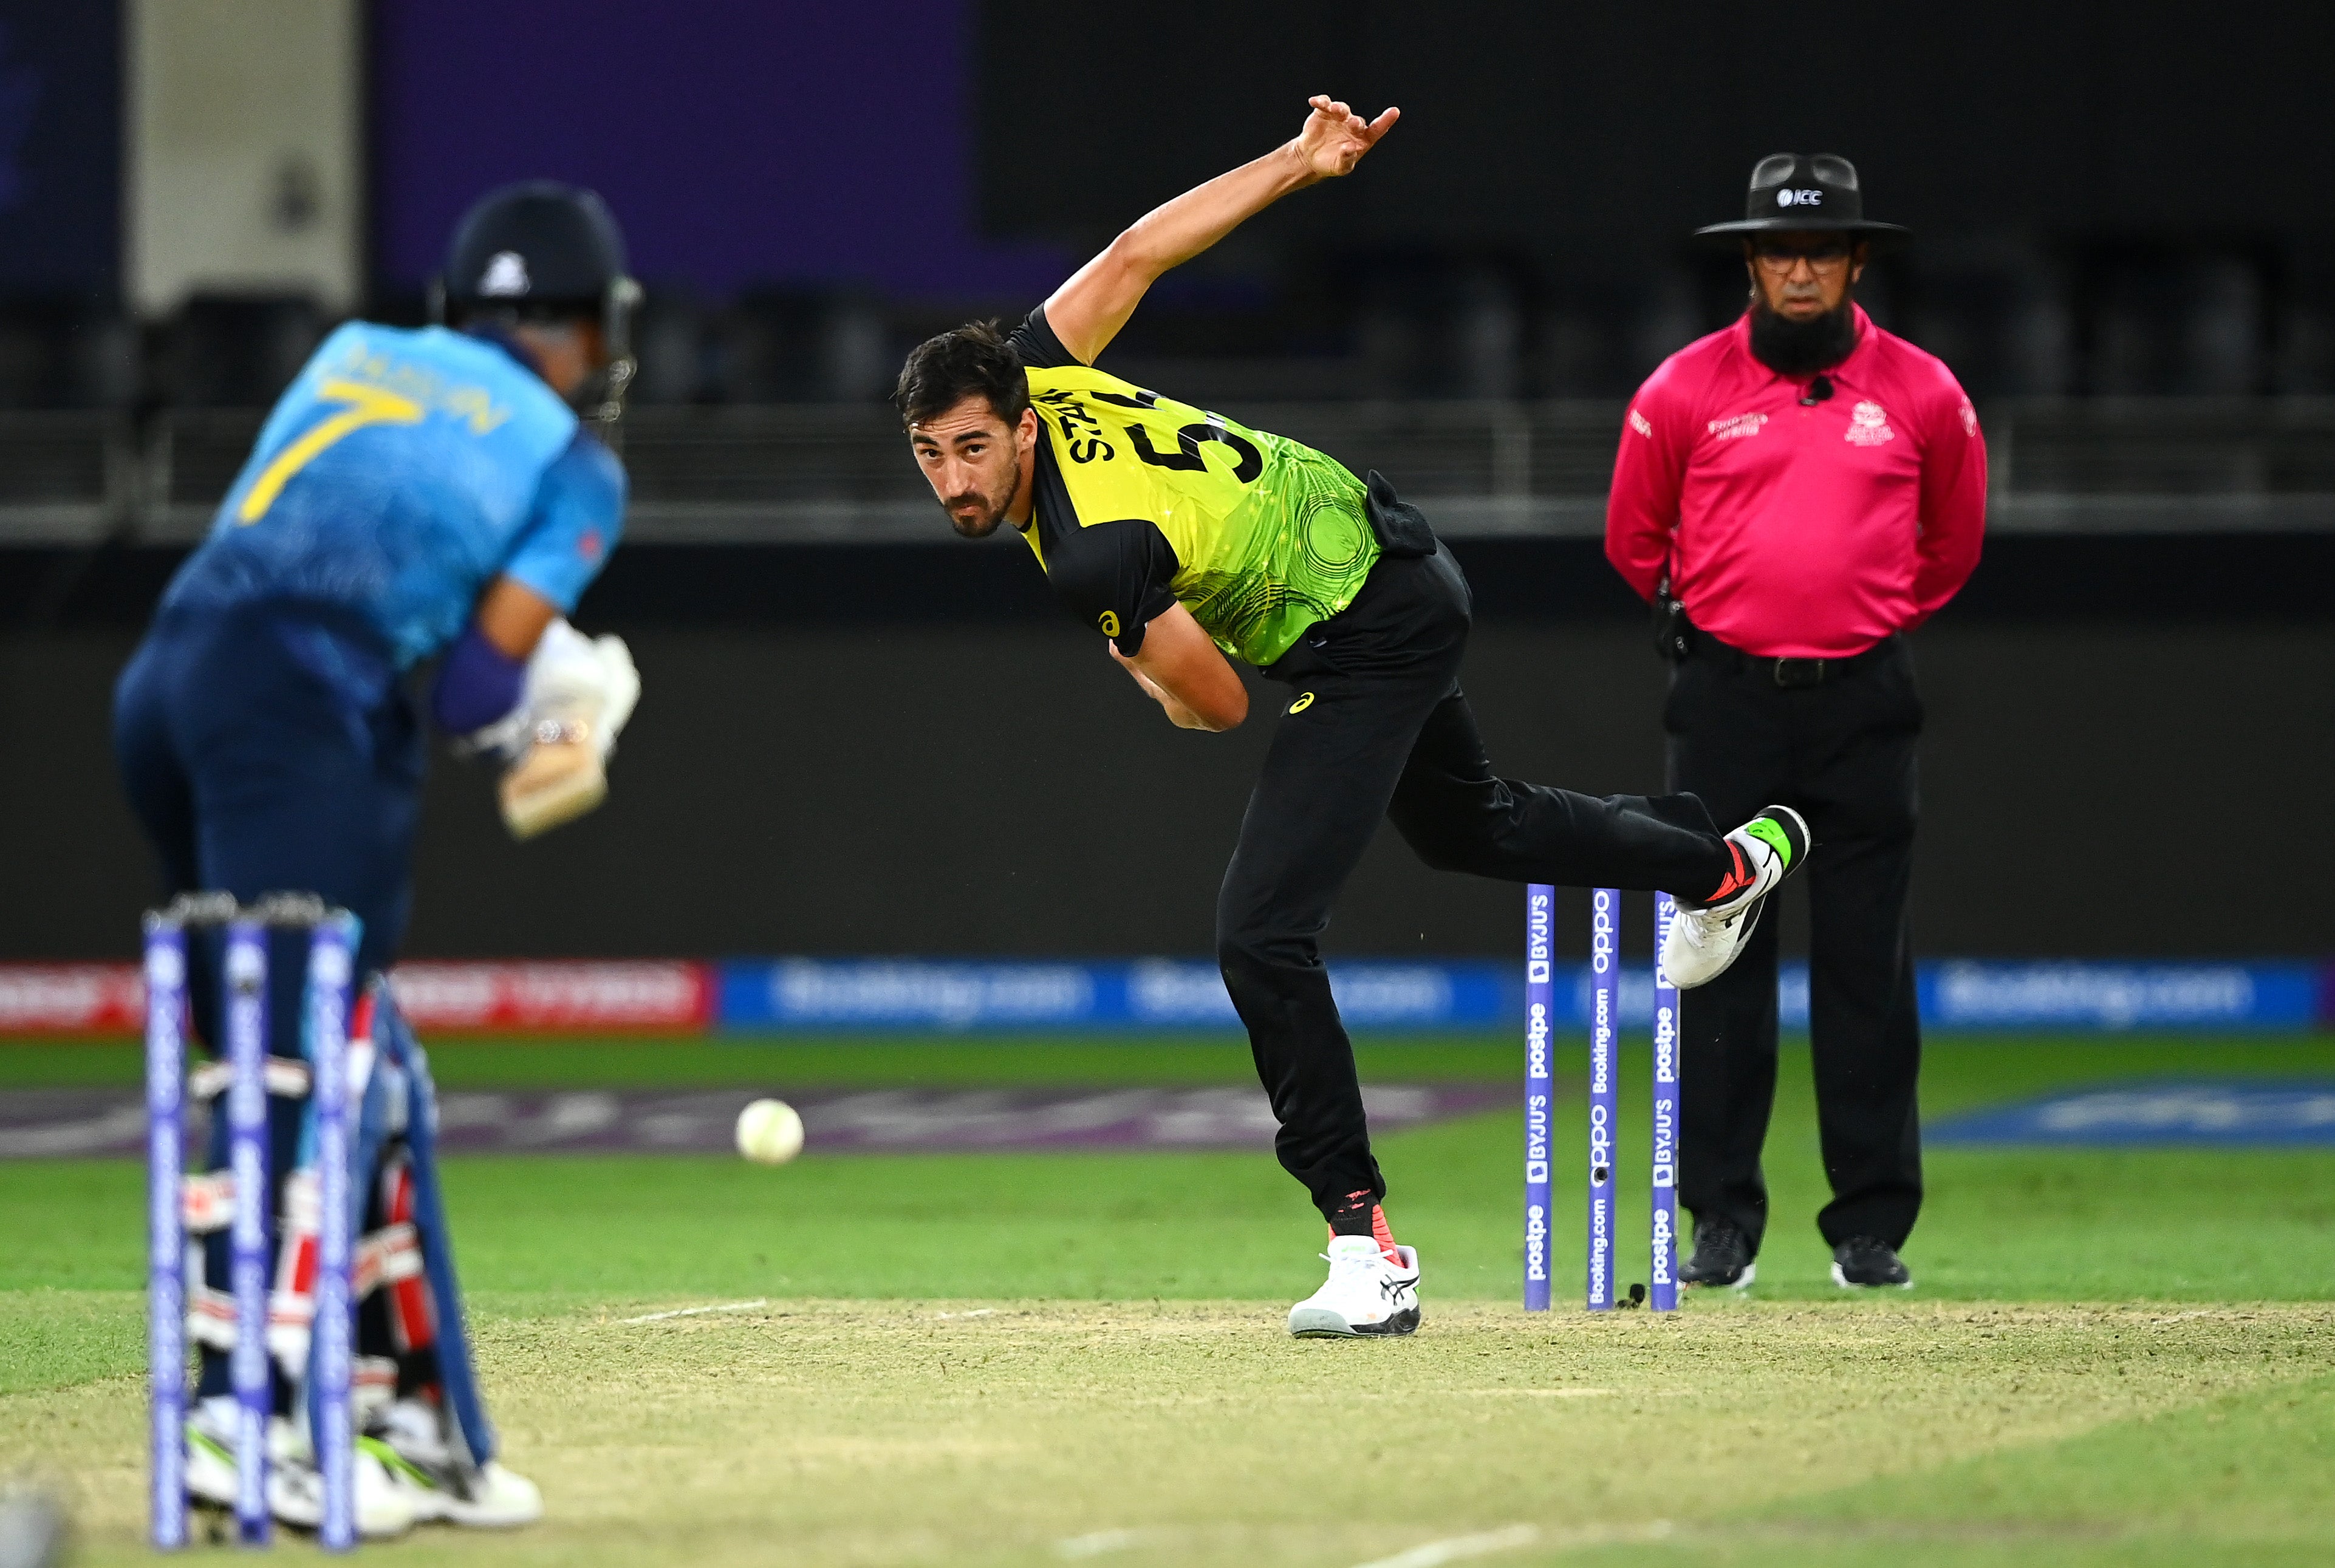 Mitchell Starc bowls for Australia in their win over Sri Lanka